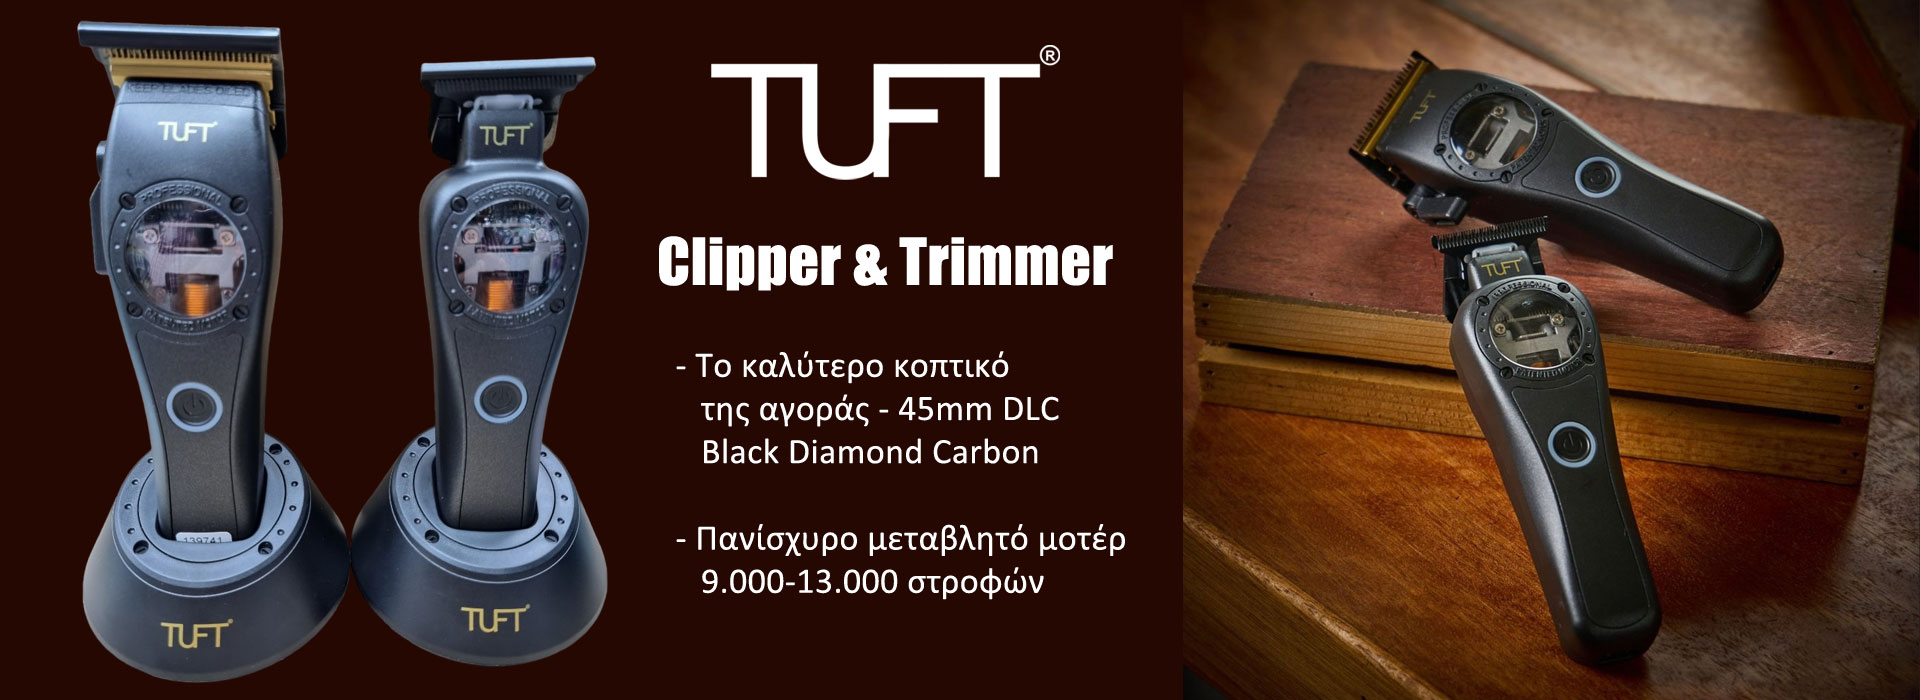 TUFT Clipper & Trimmer